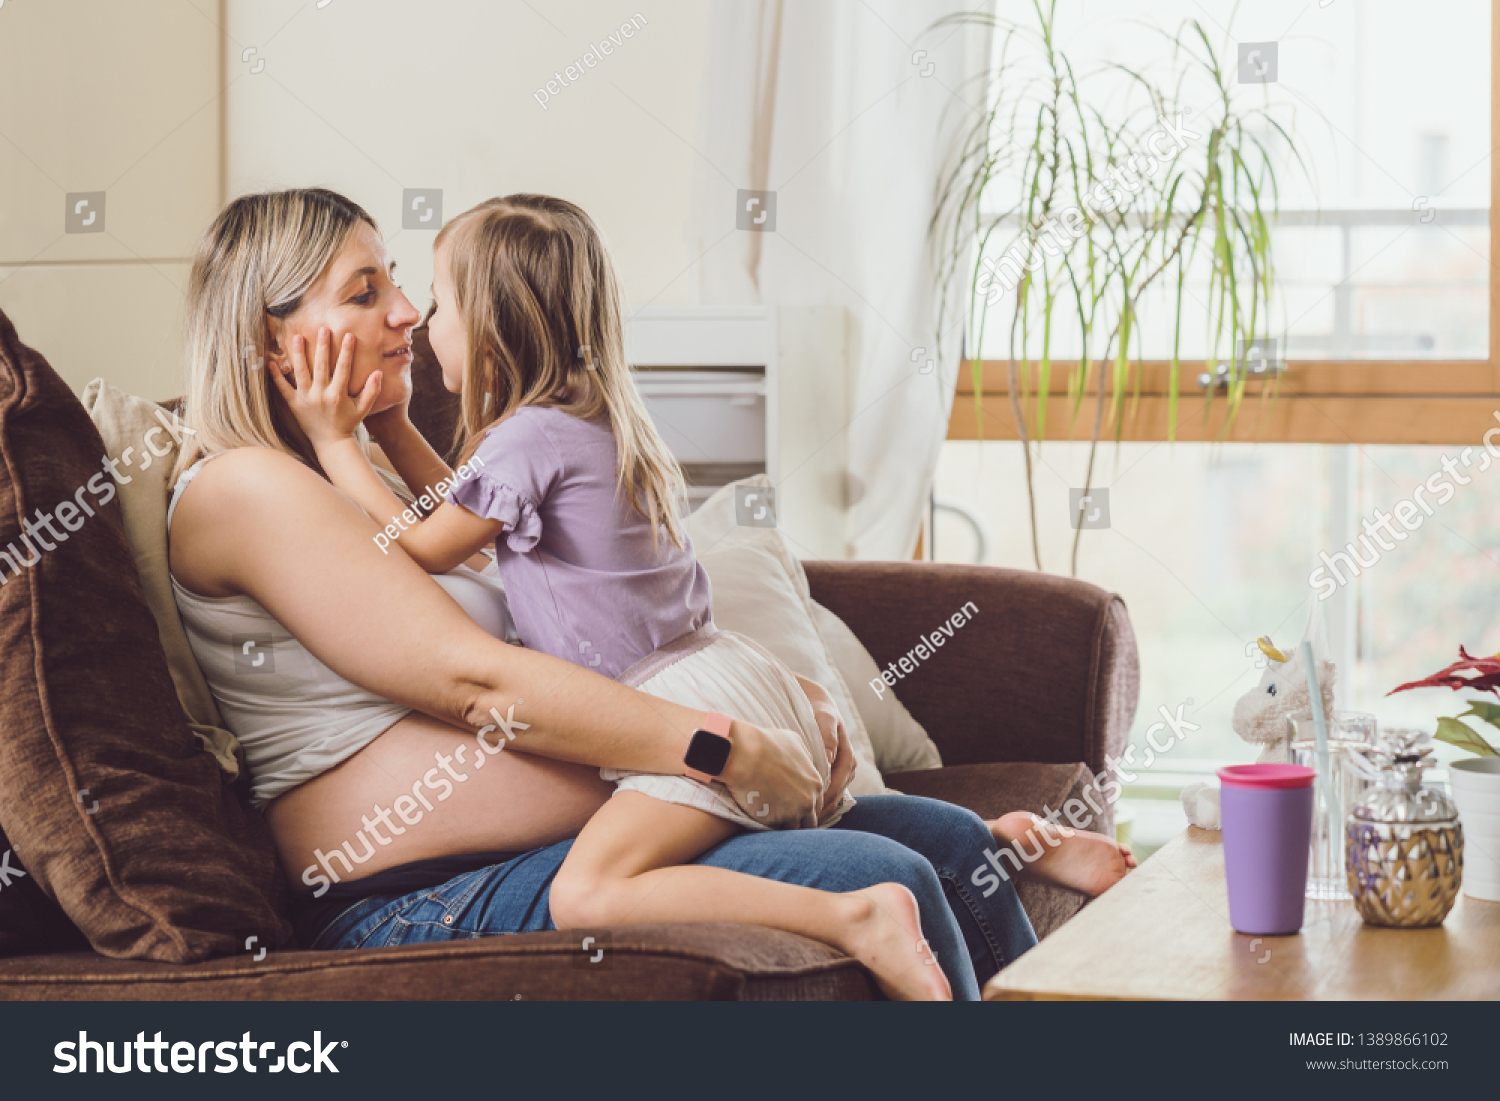 Girls Kissing On Sofa